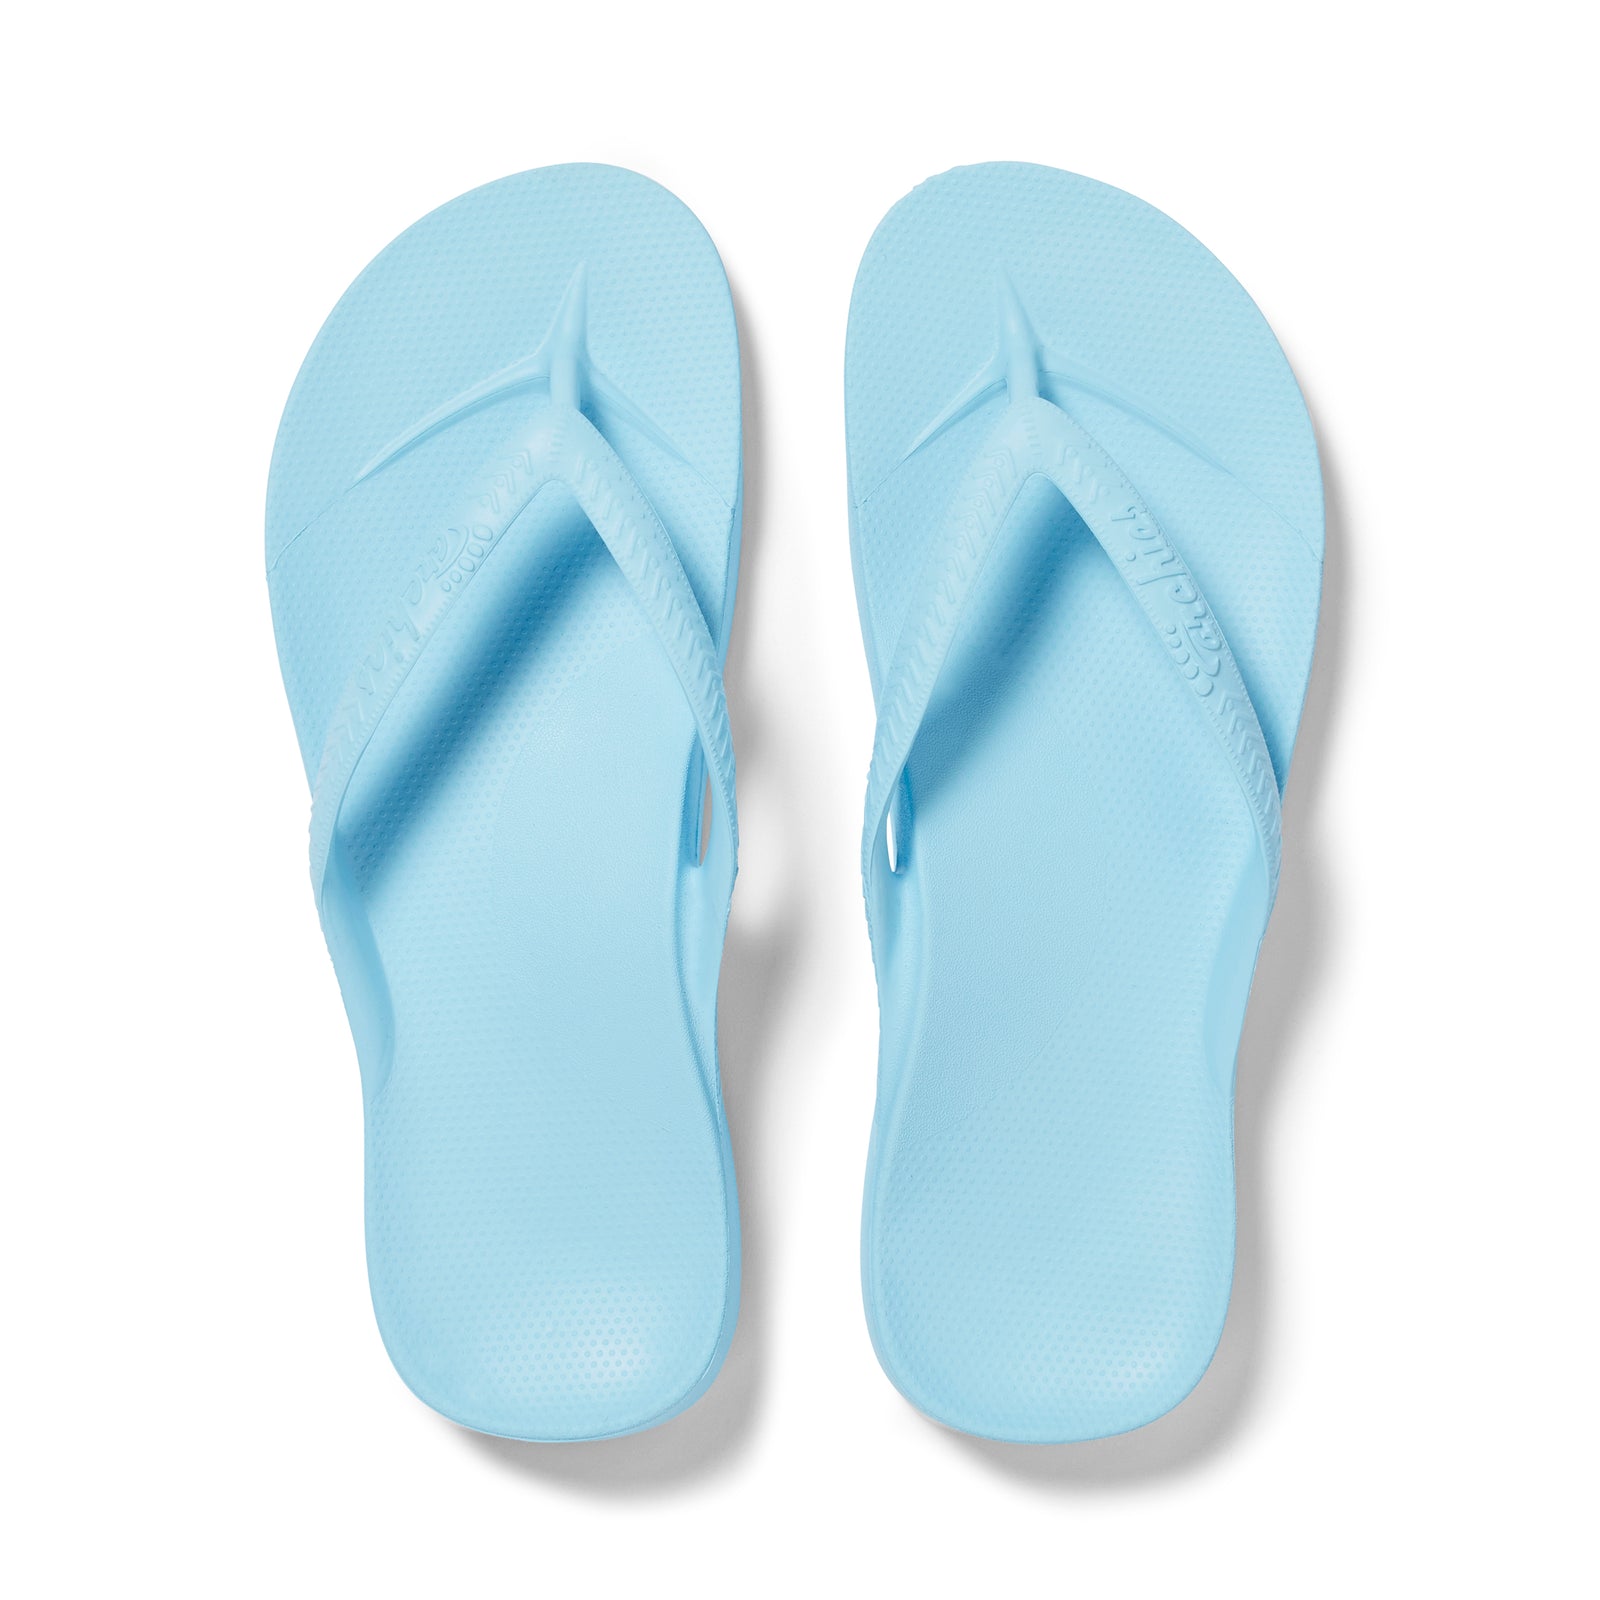 Archies Footwear - Arch Support Flip Flops & Footwear – Archies ...